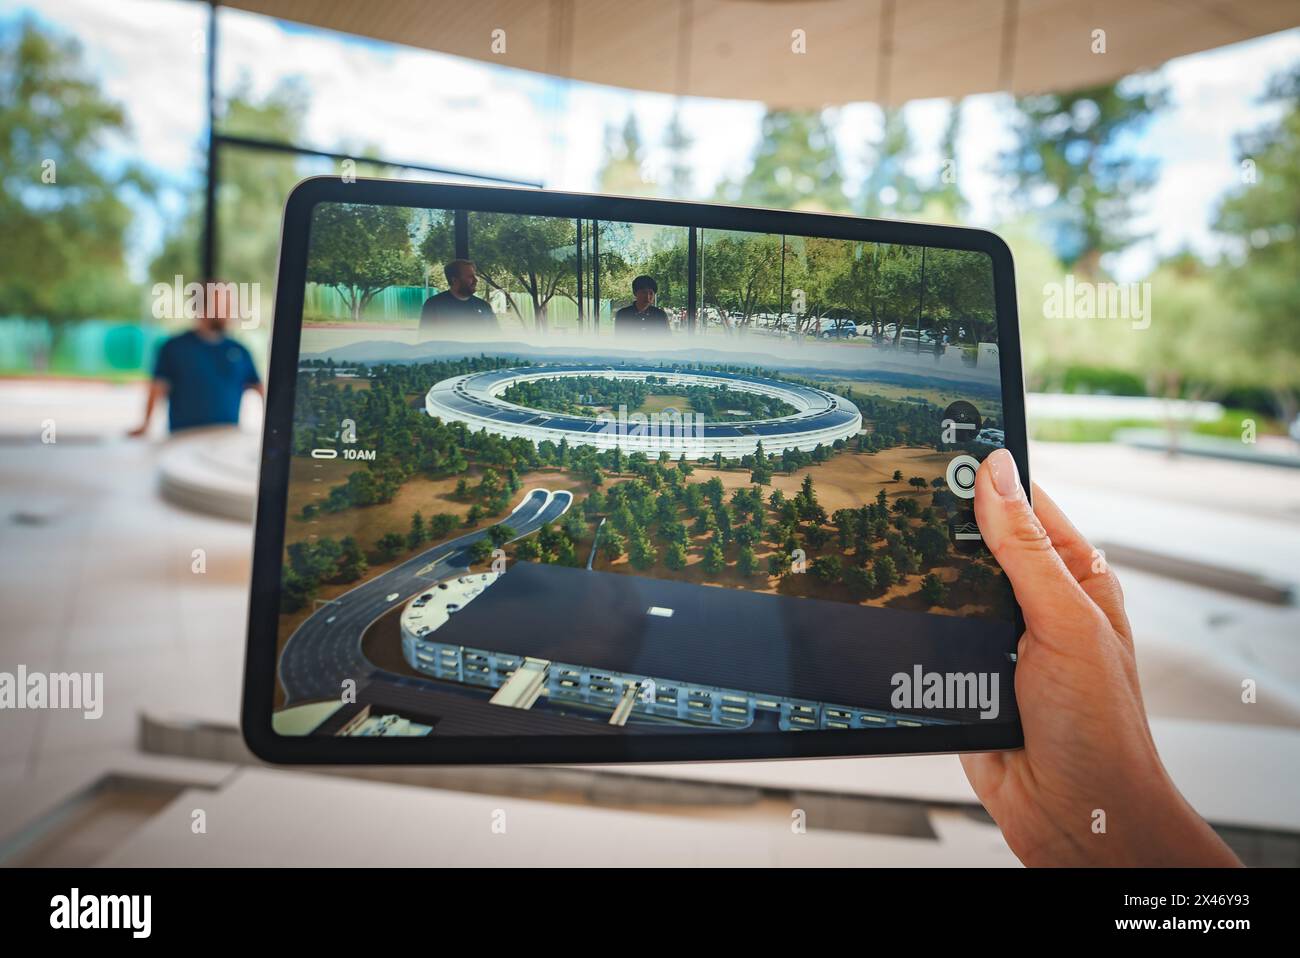 iPad displaying Apple Park, Cupertino, CA indoors, blurred background. Stock Photo